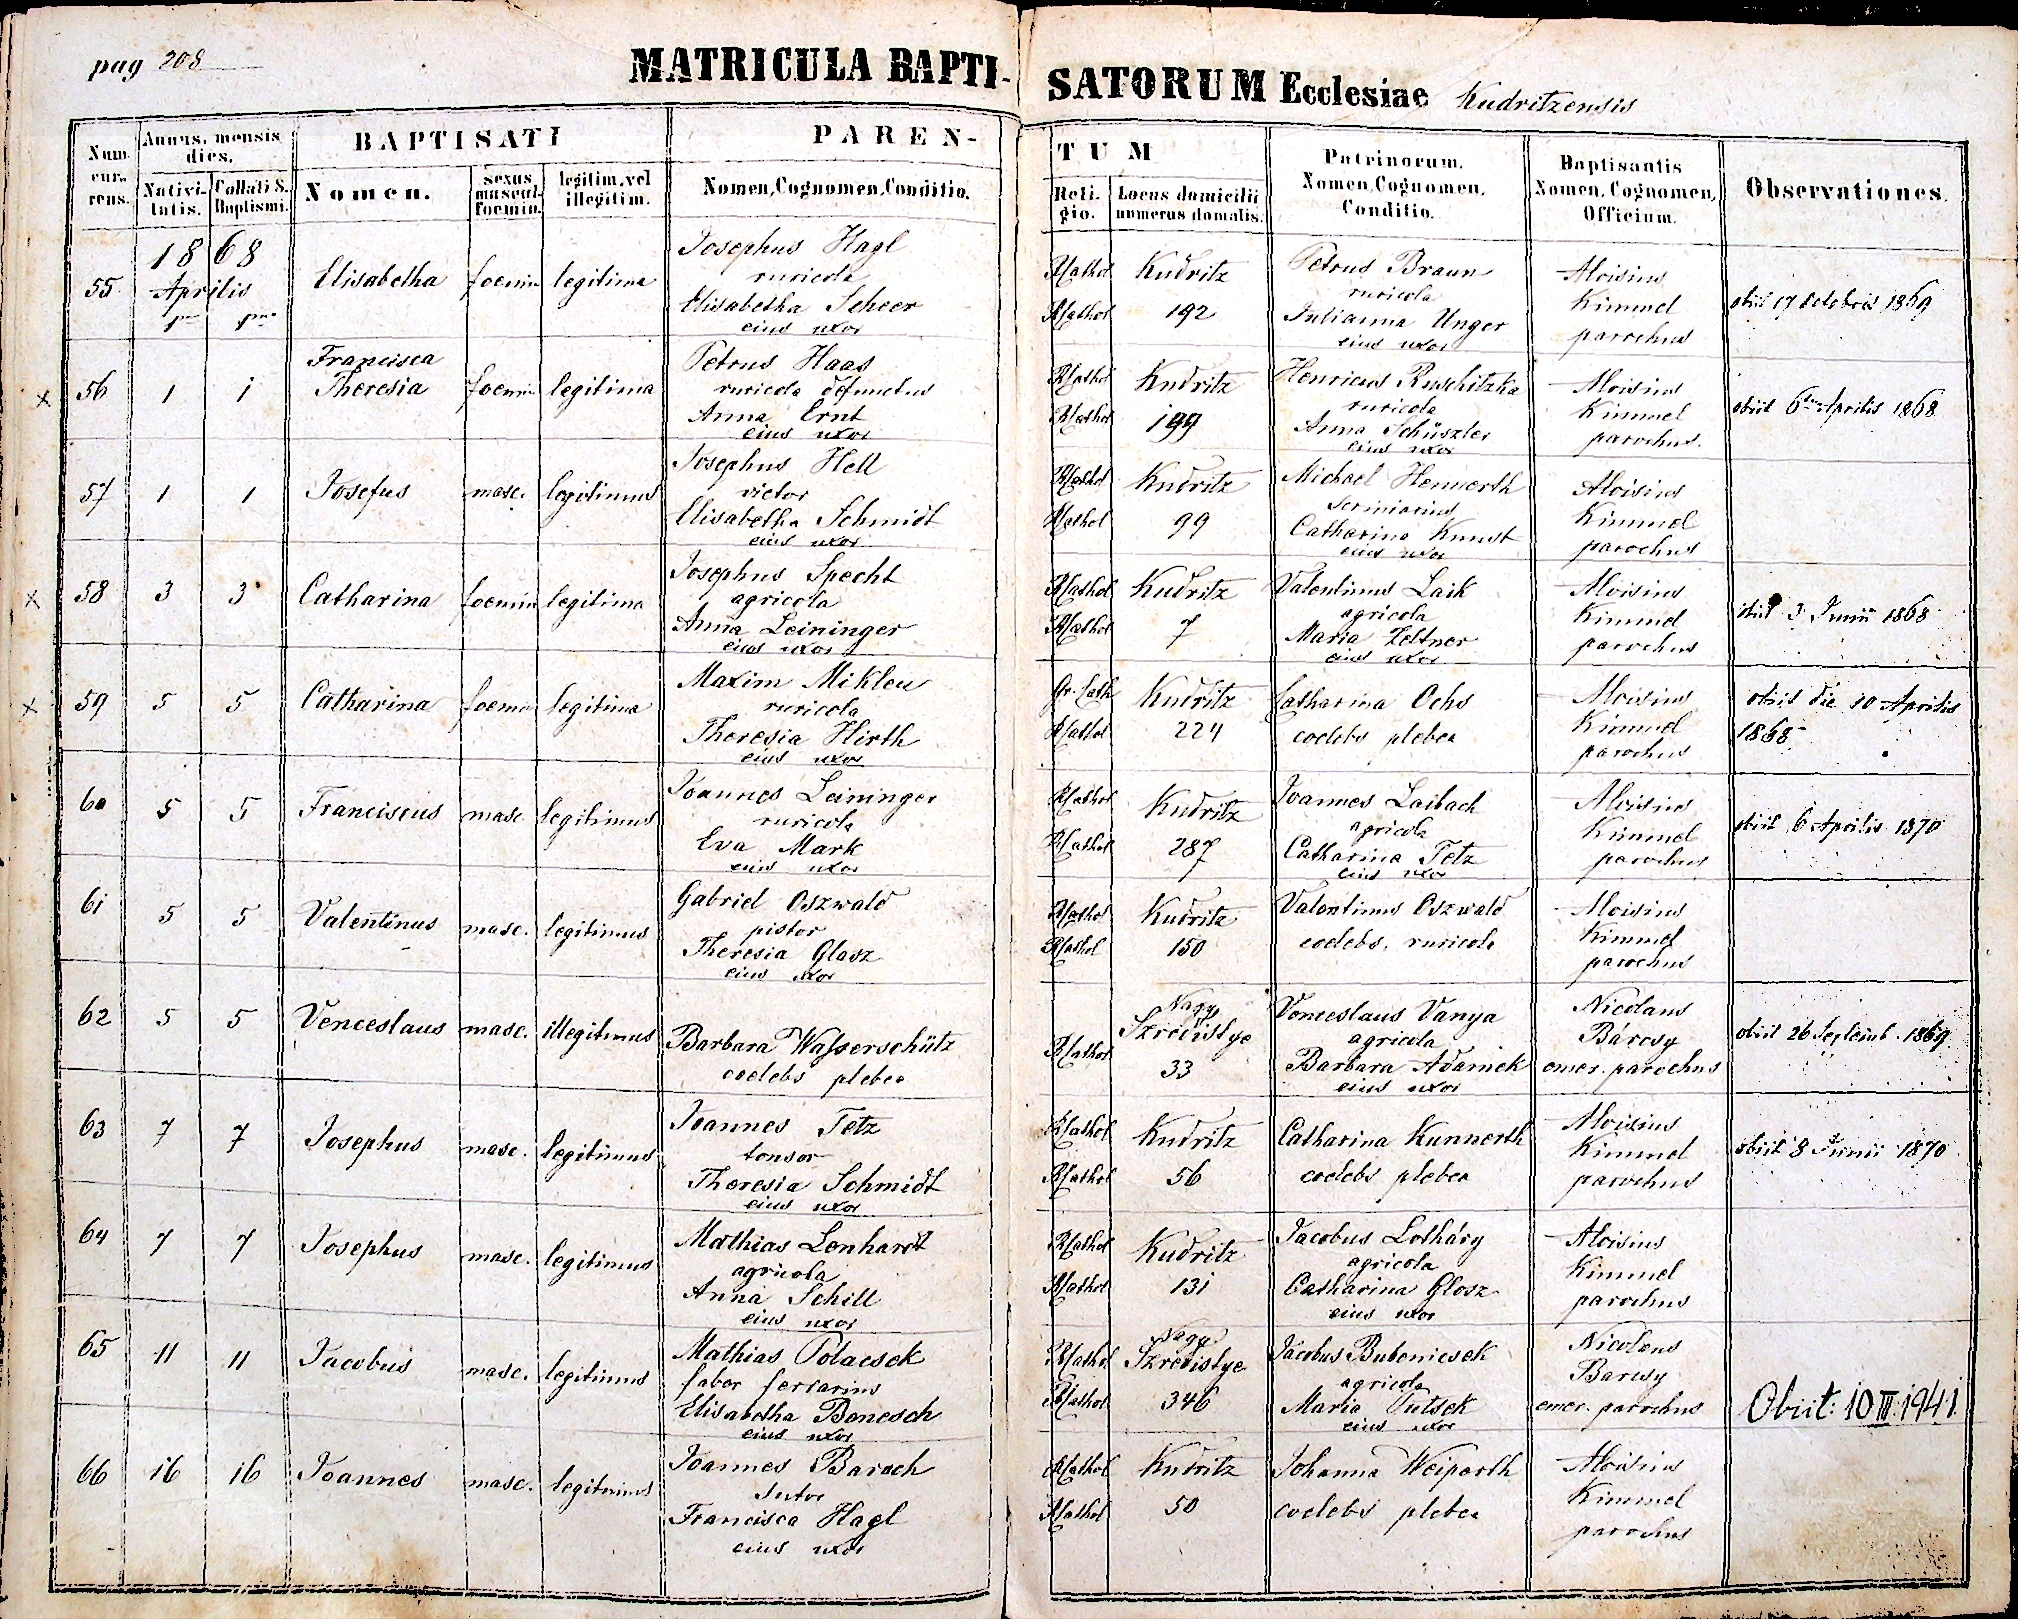 images/church_records/BIRTHS/1852-1870B/208